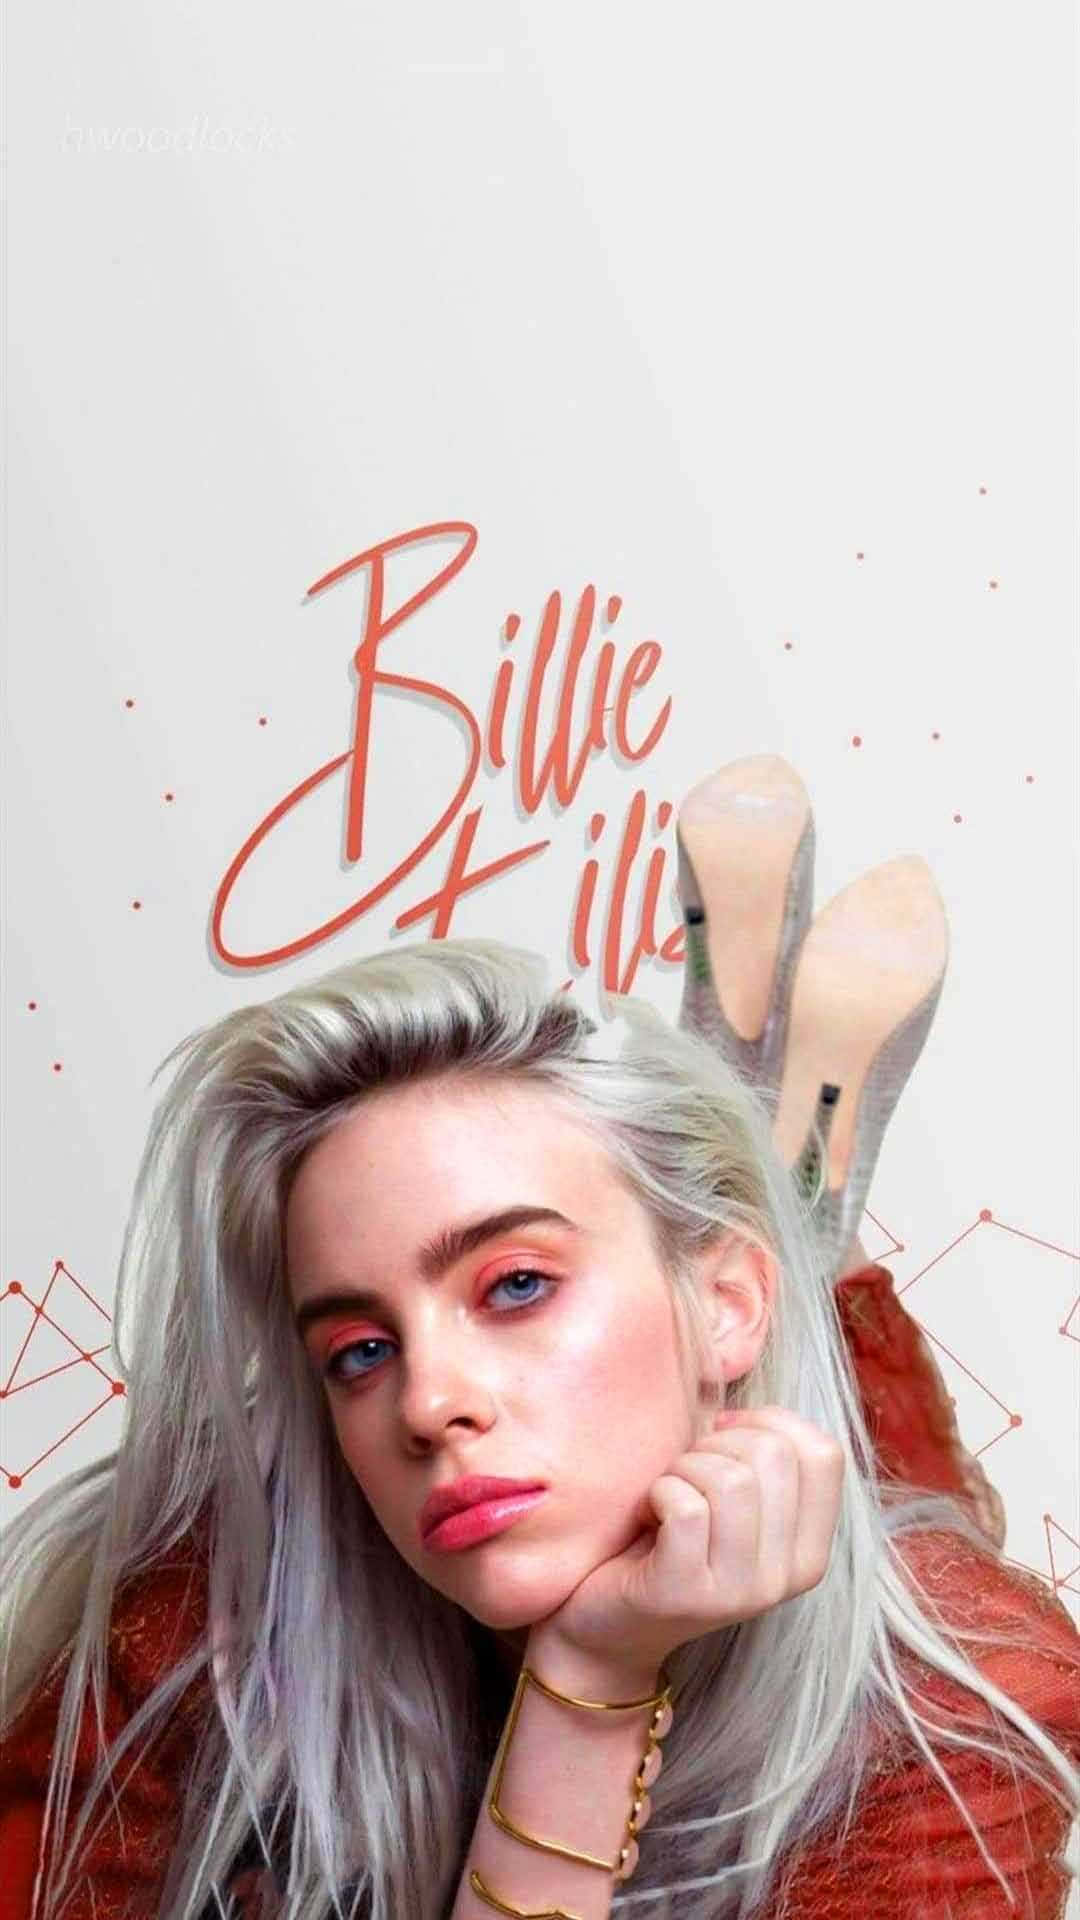 Billie Eilish at 2021 awards season Wallpaper